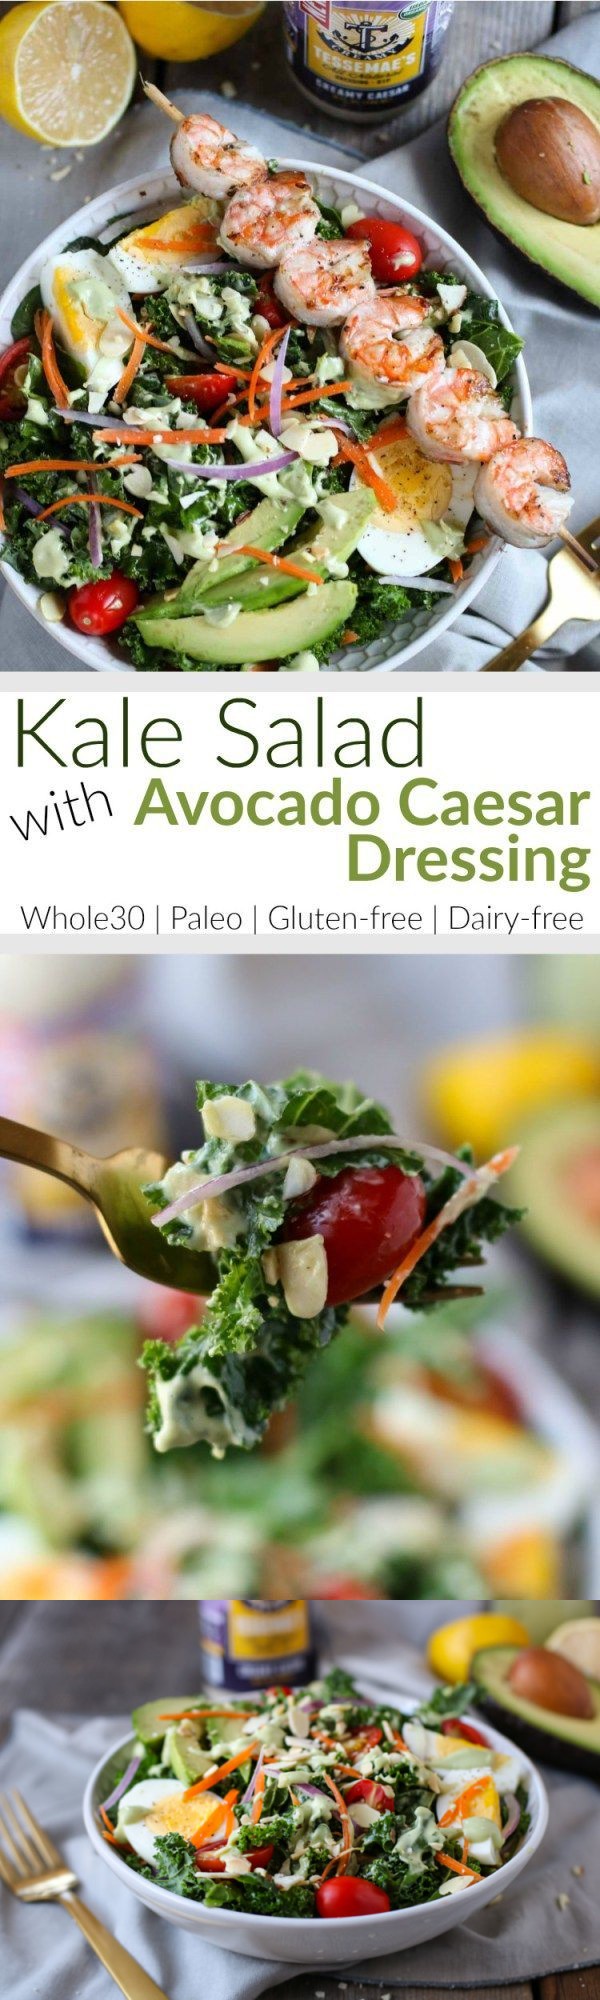 Kale Salad with Avocado Caesar Dressing